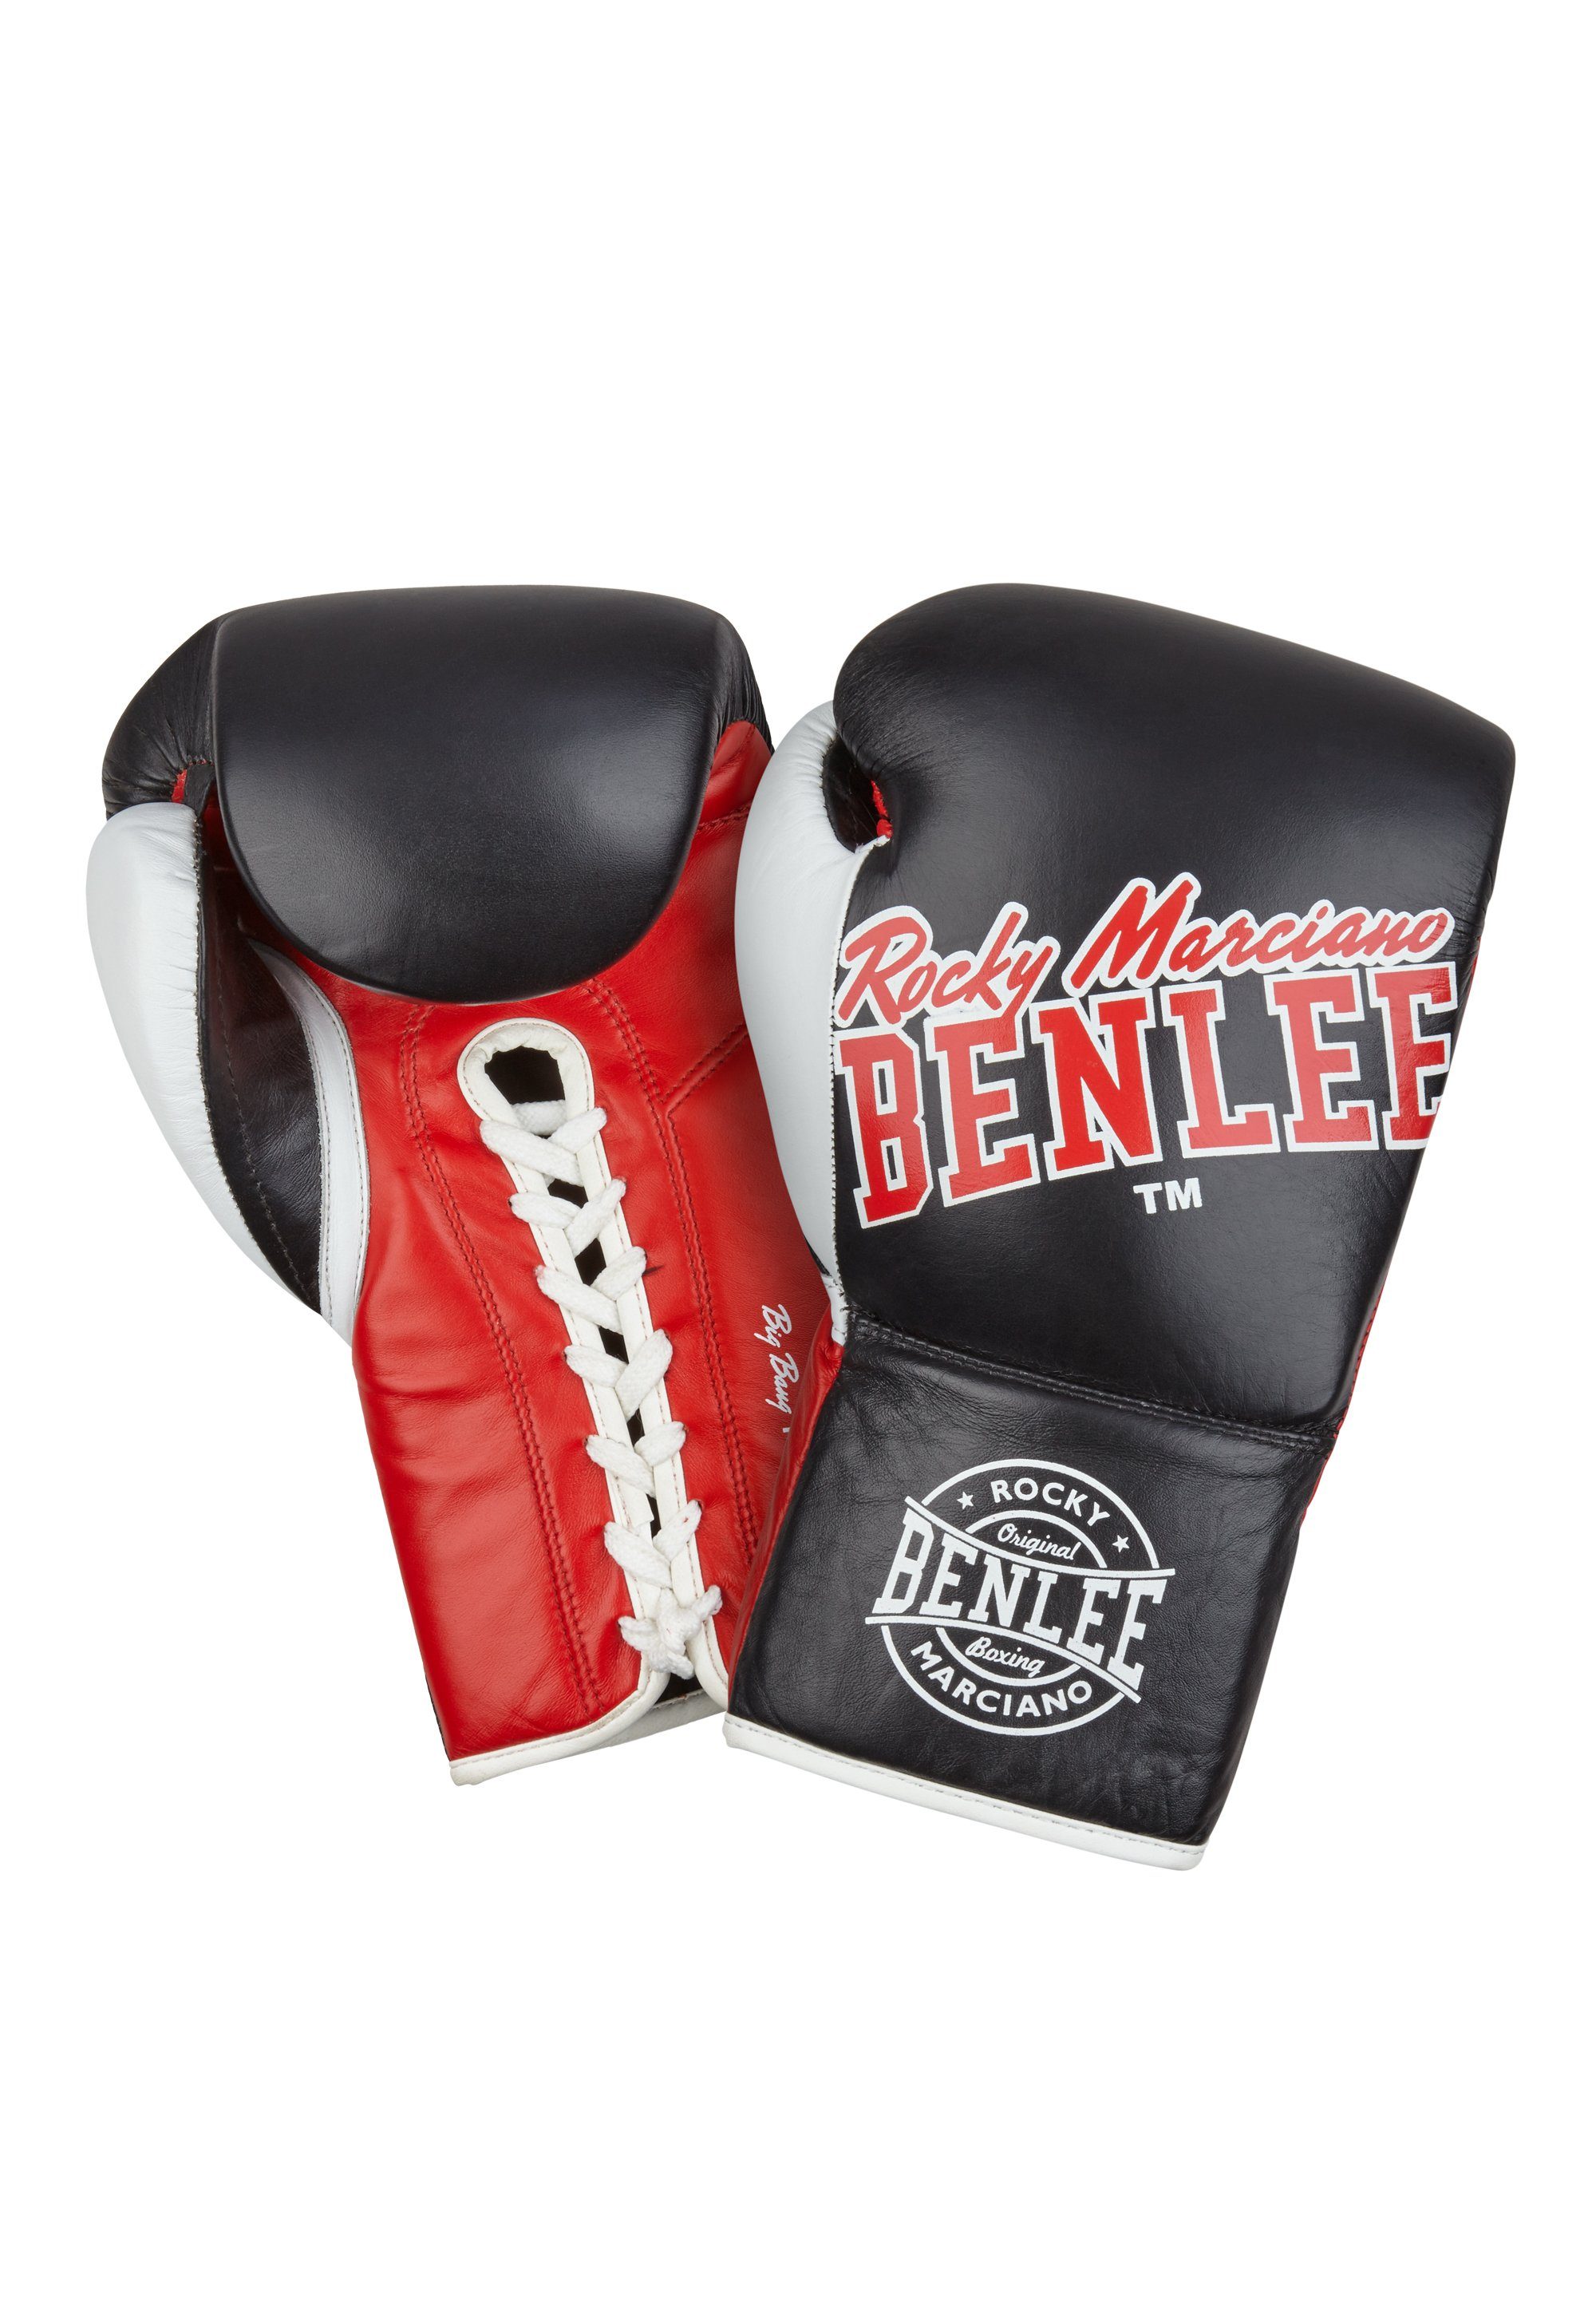 Benlee Rocky Marciano Black Boxhandschuhe BANG BIG